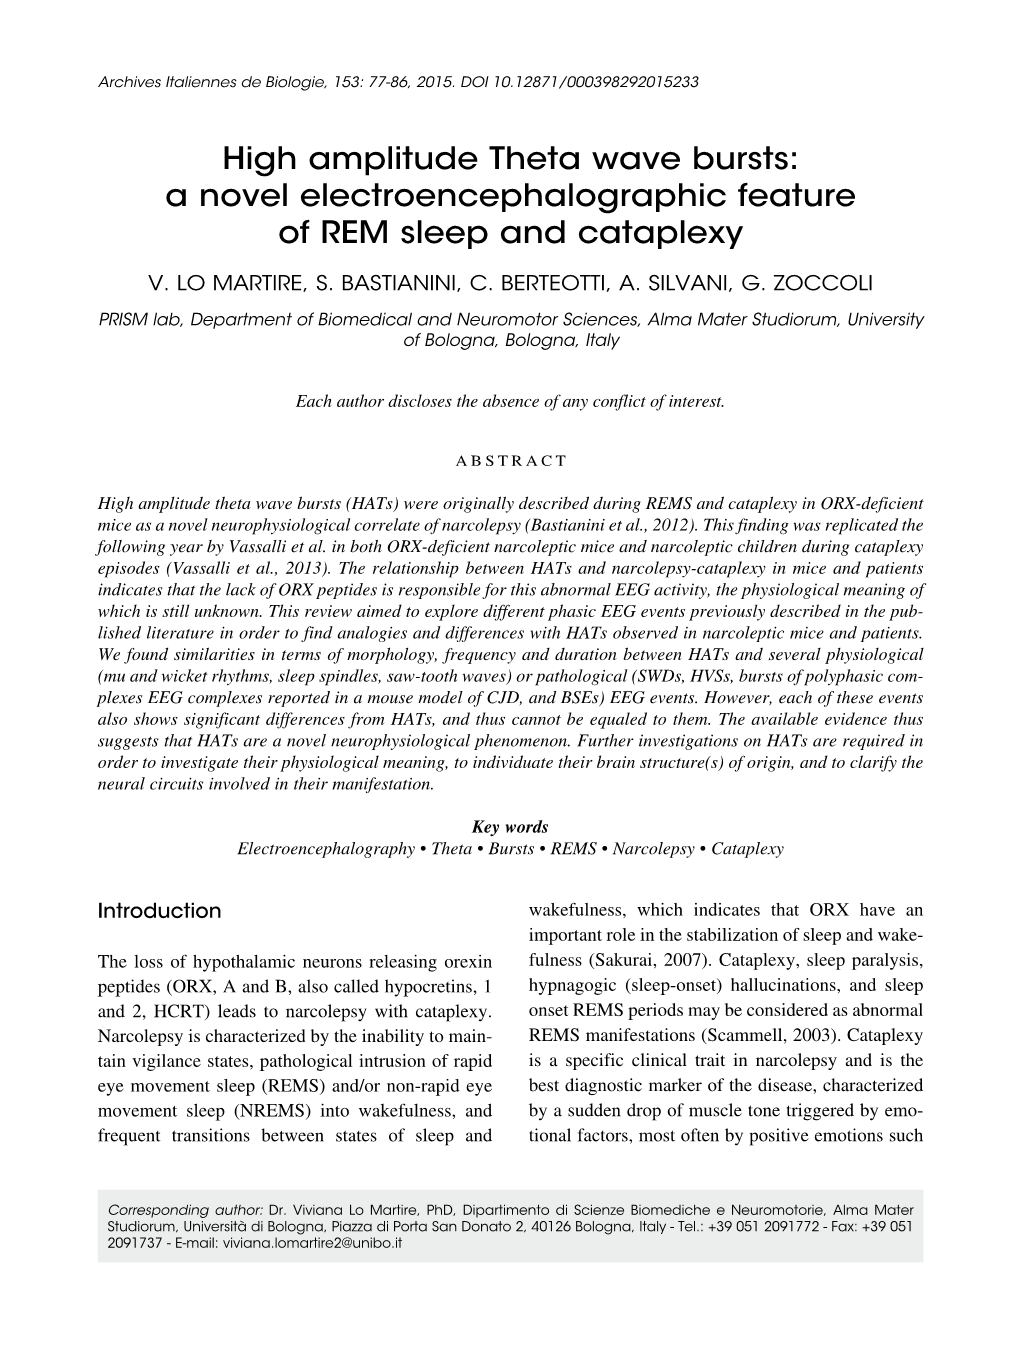 High Amplitude Theta Wave Bursts: a Novel Electroencephalographic Feature of REM Sleep and Cataplexy